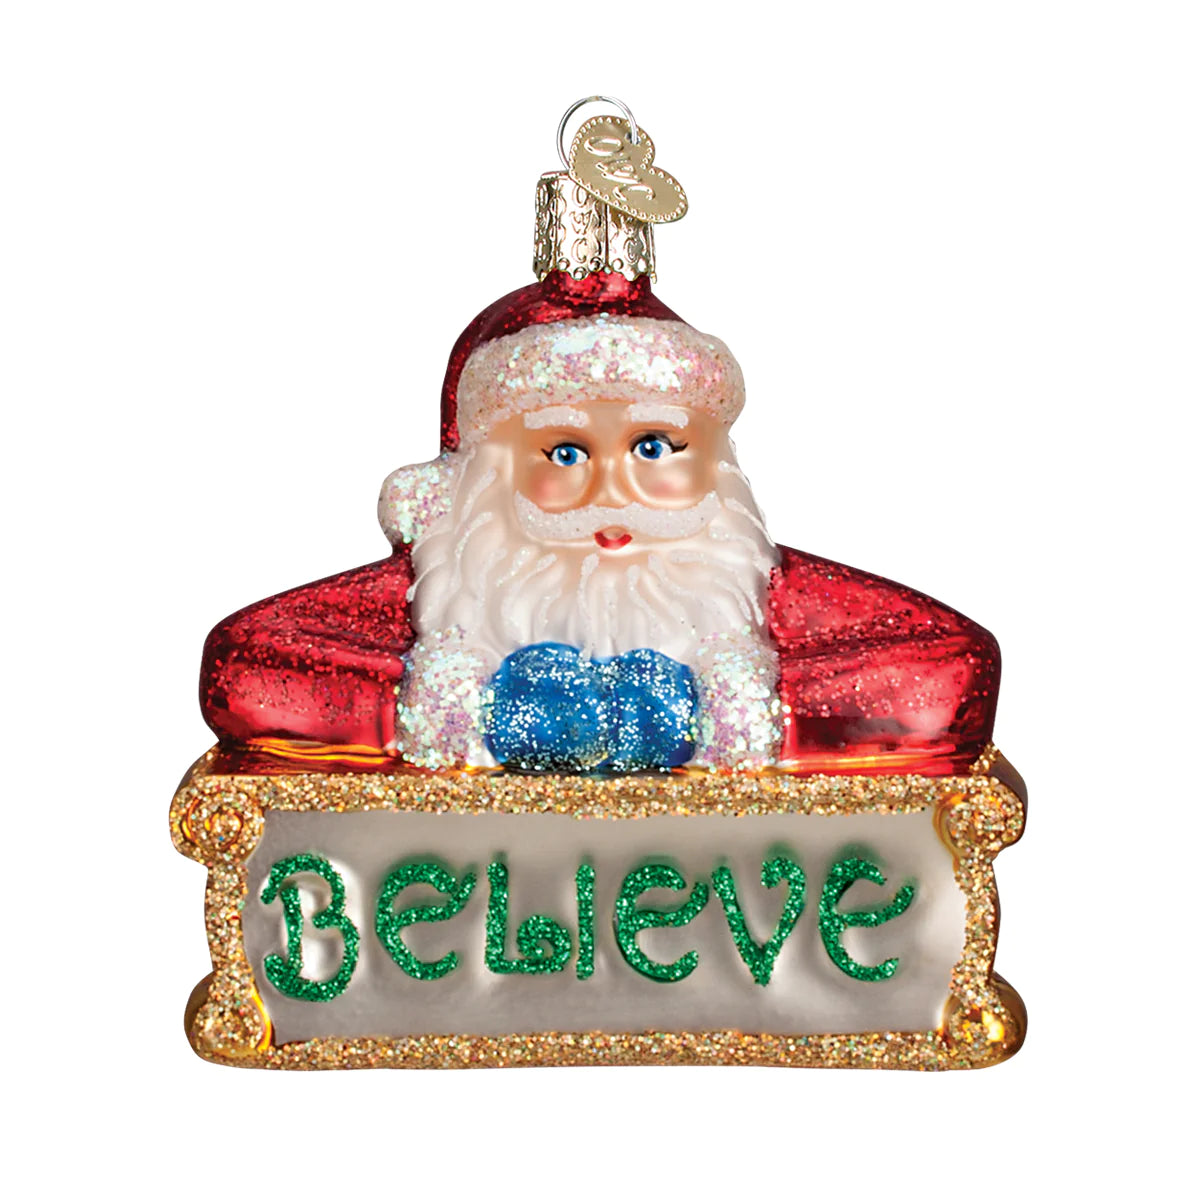 Believe Santa Ornament